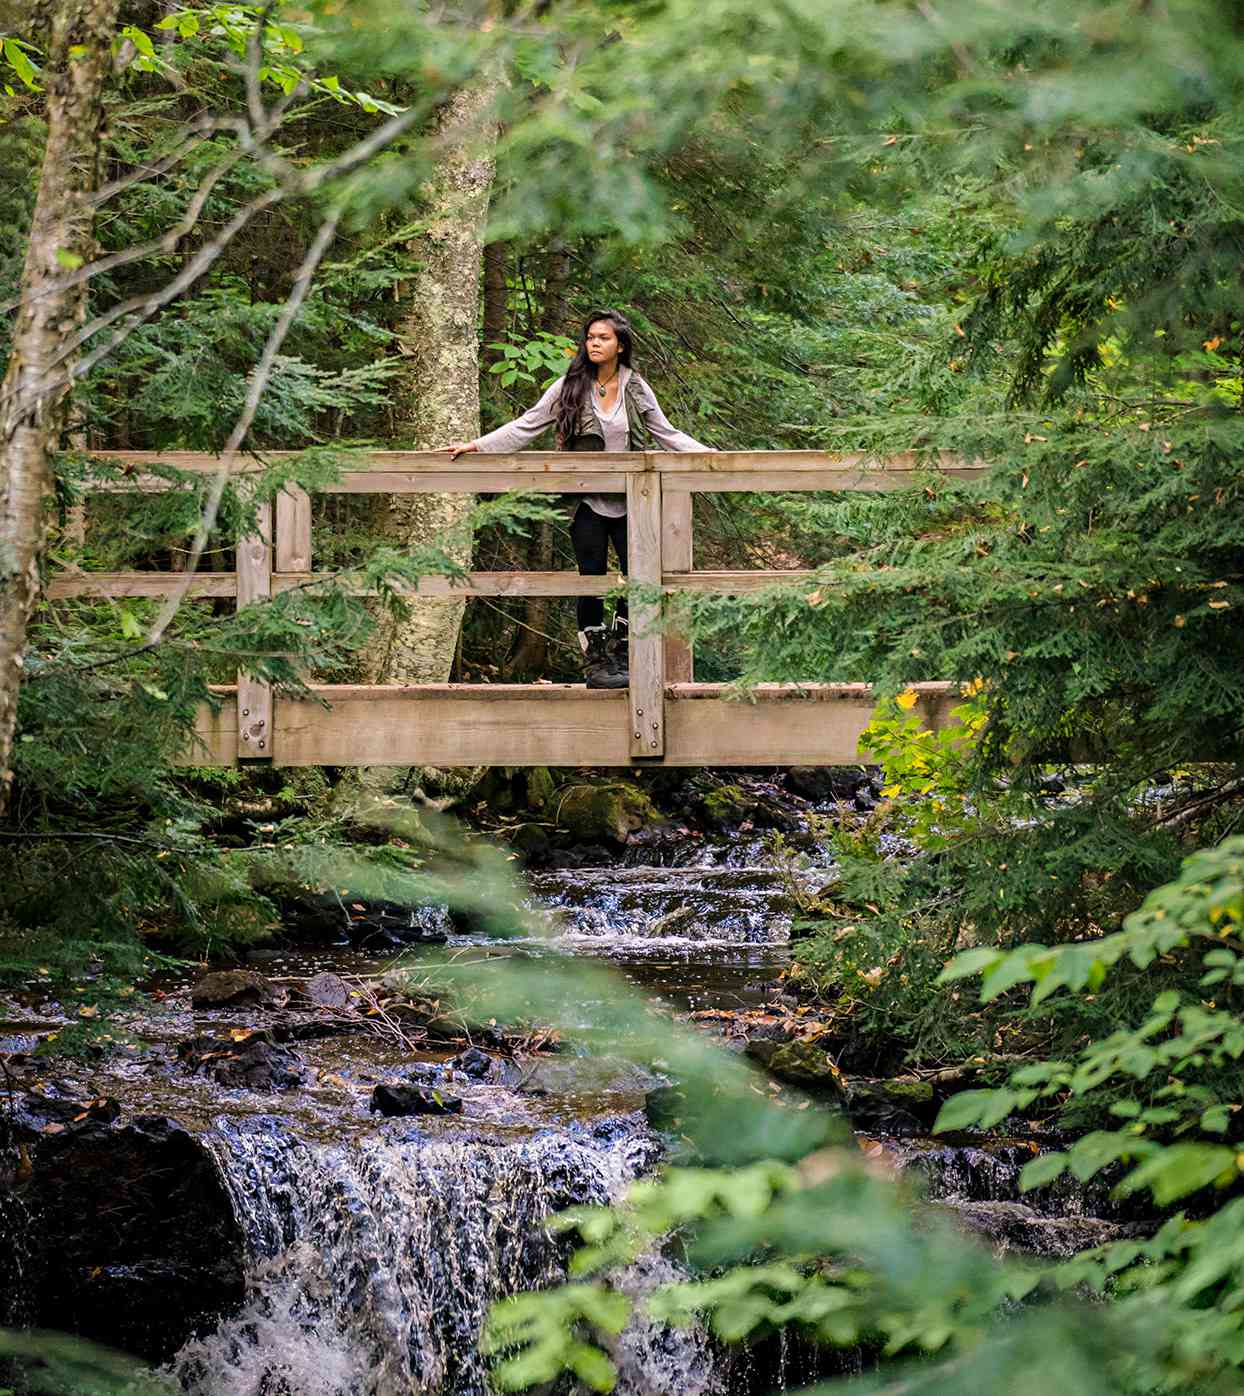 woman bridge forest stream pictured rocks national lakeshore michigan upper peninsula